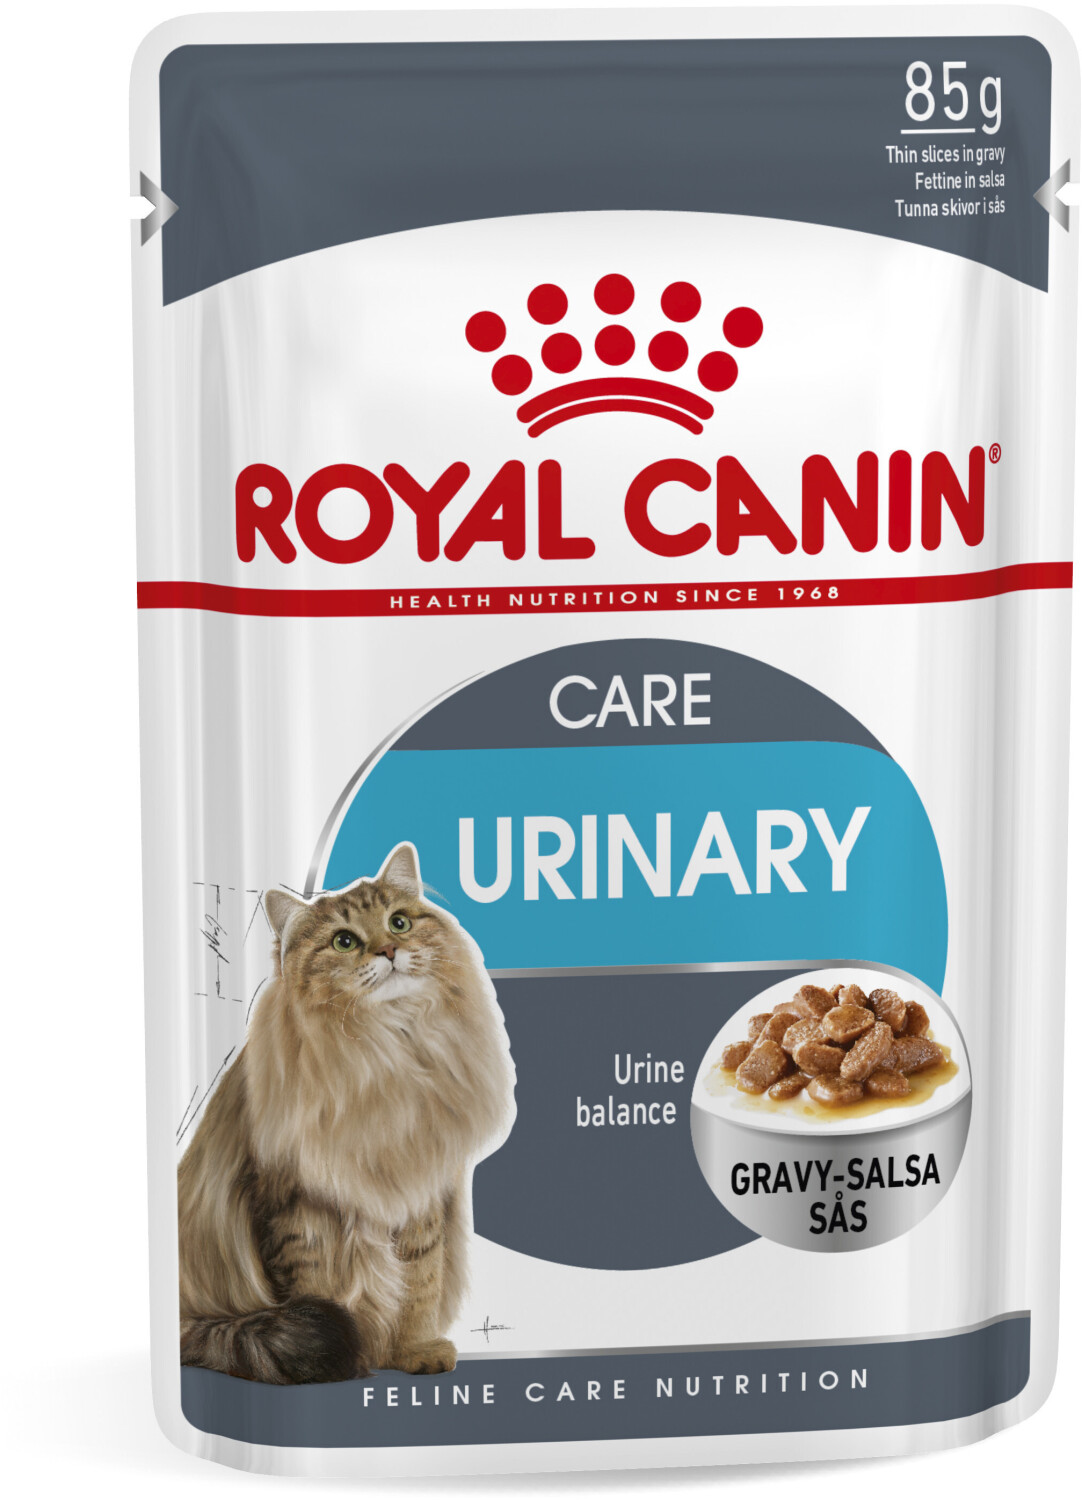 Royal Canin Urinary Care sauce au meilleur prix sur